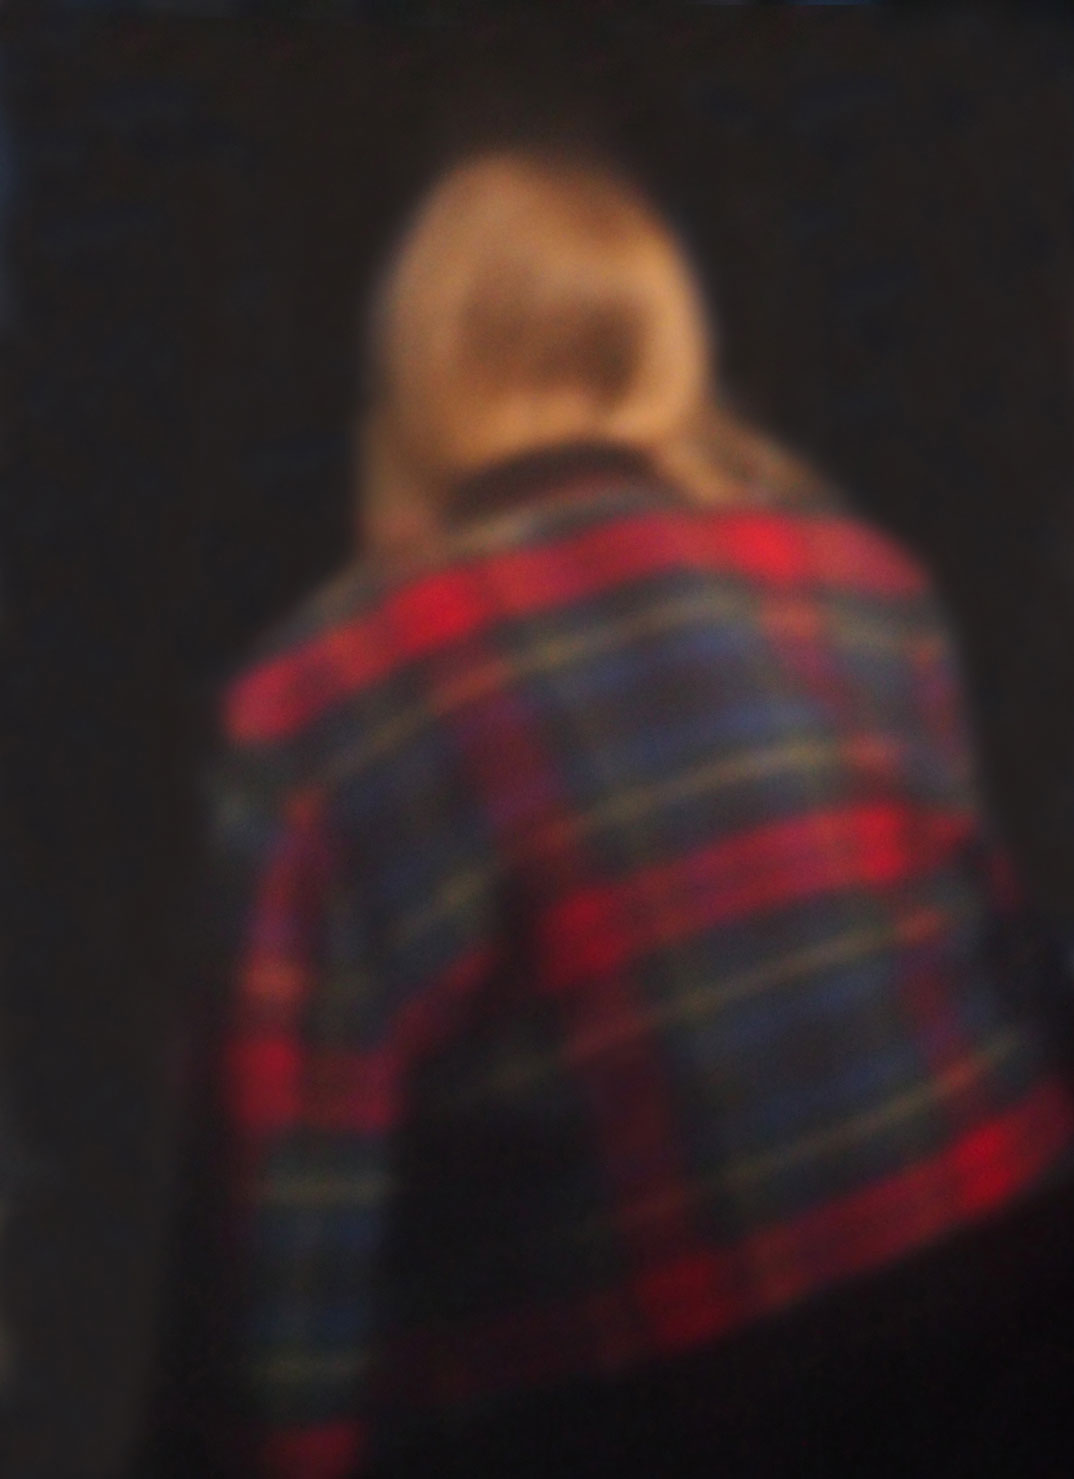 20 „Karrierte Jacke“, 2016 Amsterdam, Camera Obscura, Pigmentdruck auf Alu-Dibond